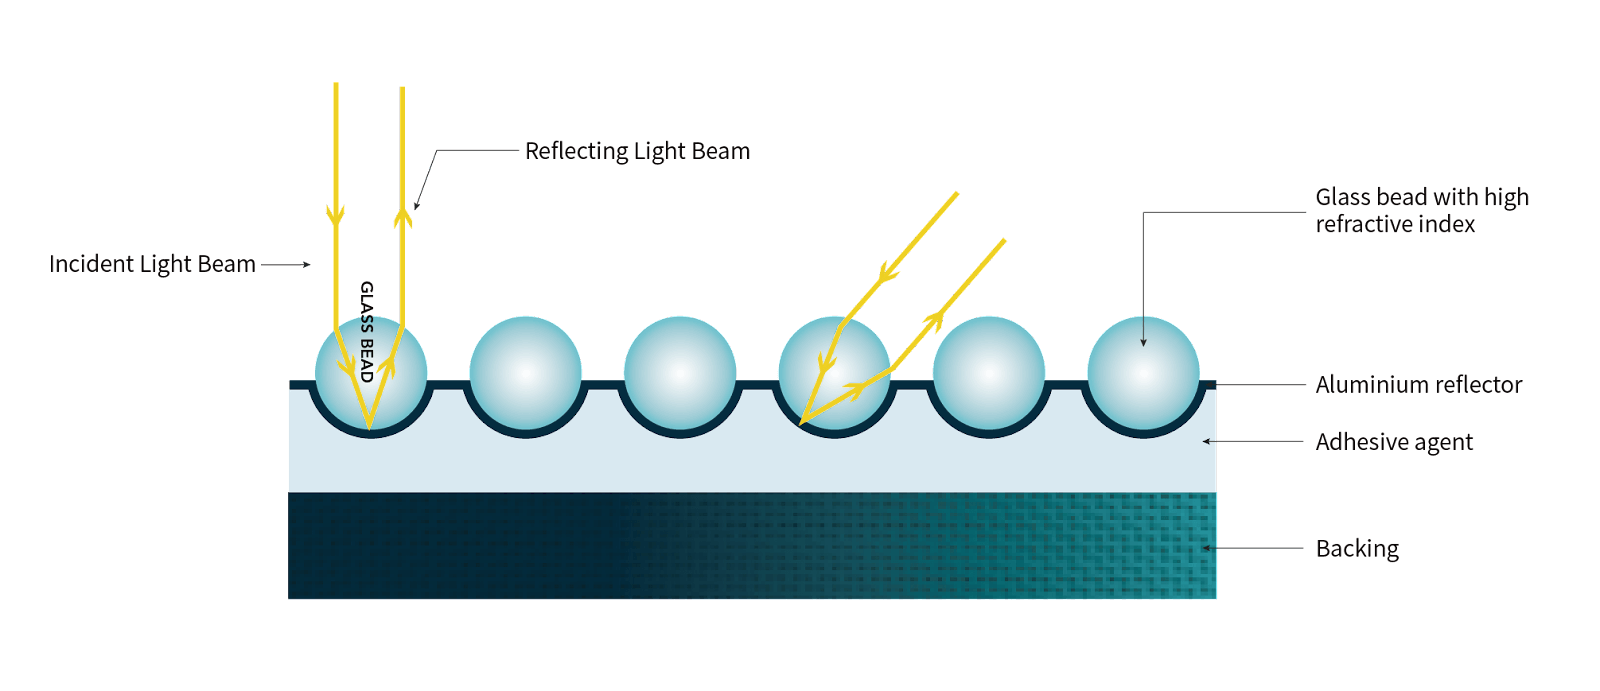 Figure 4 Retroreflection in Glass Beads